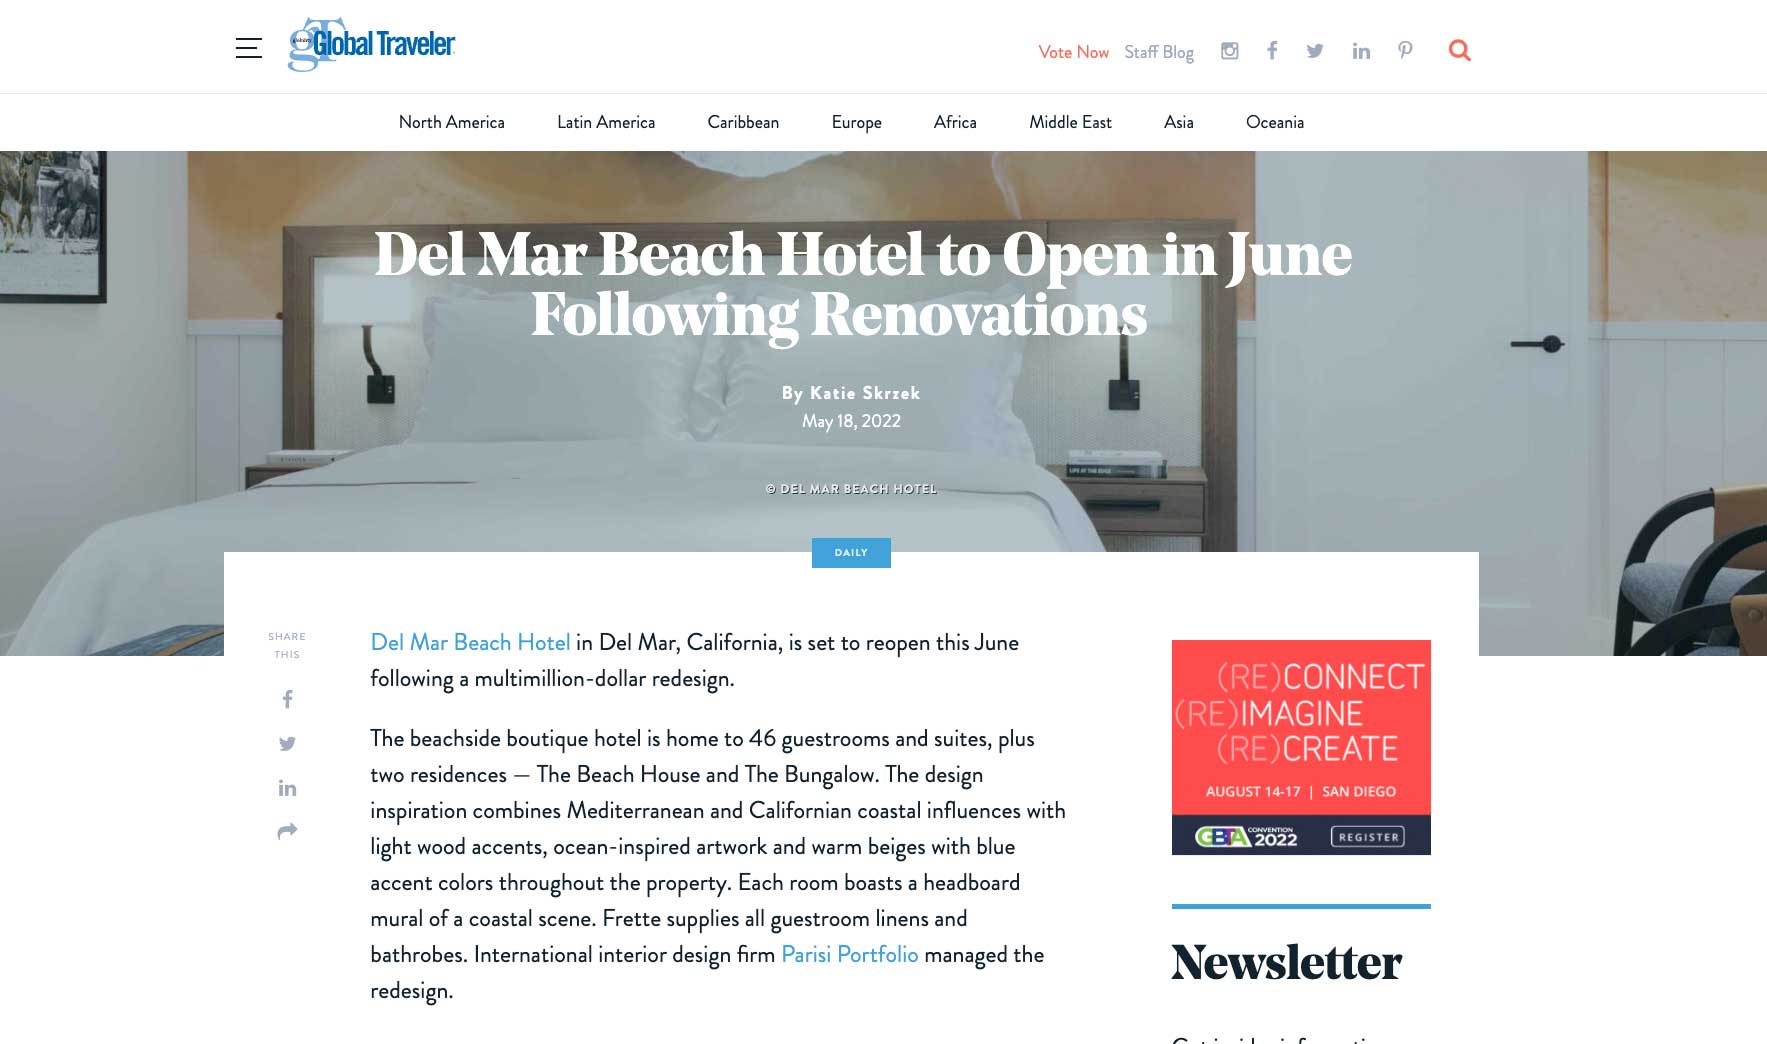 Del Mar Beach Hotel in Del Mar is set to reopen this June